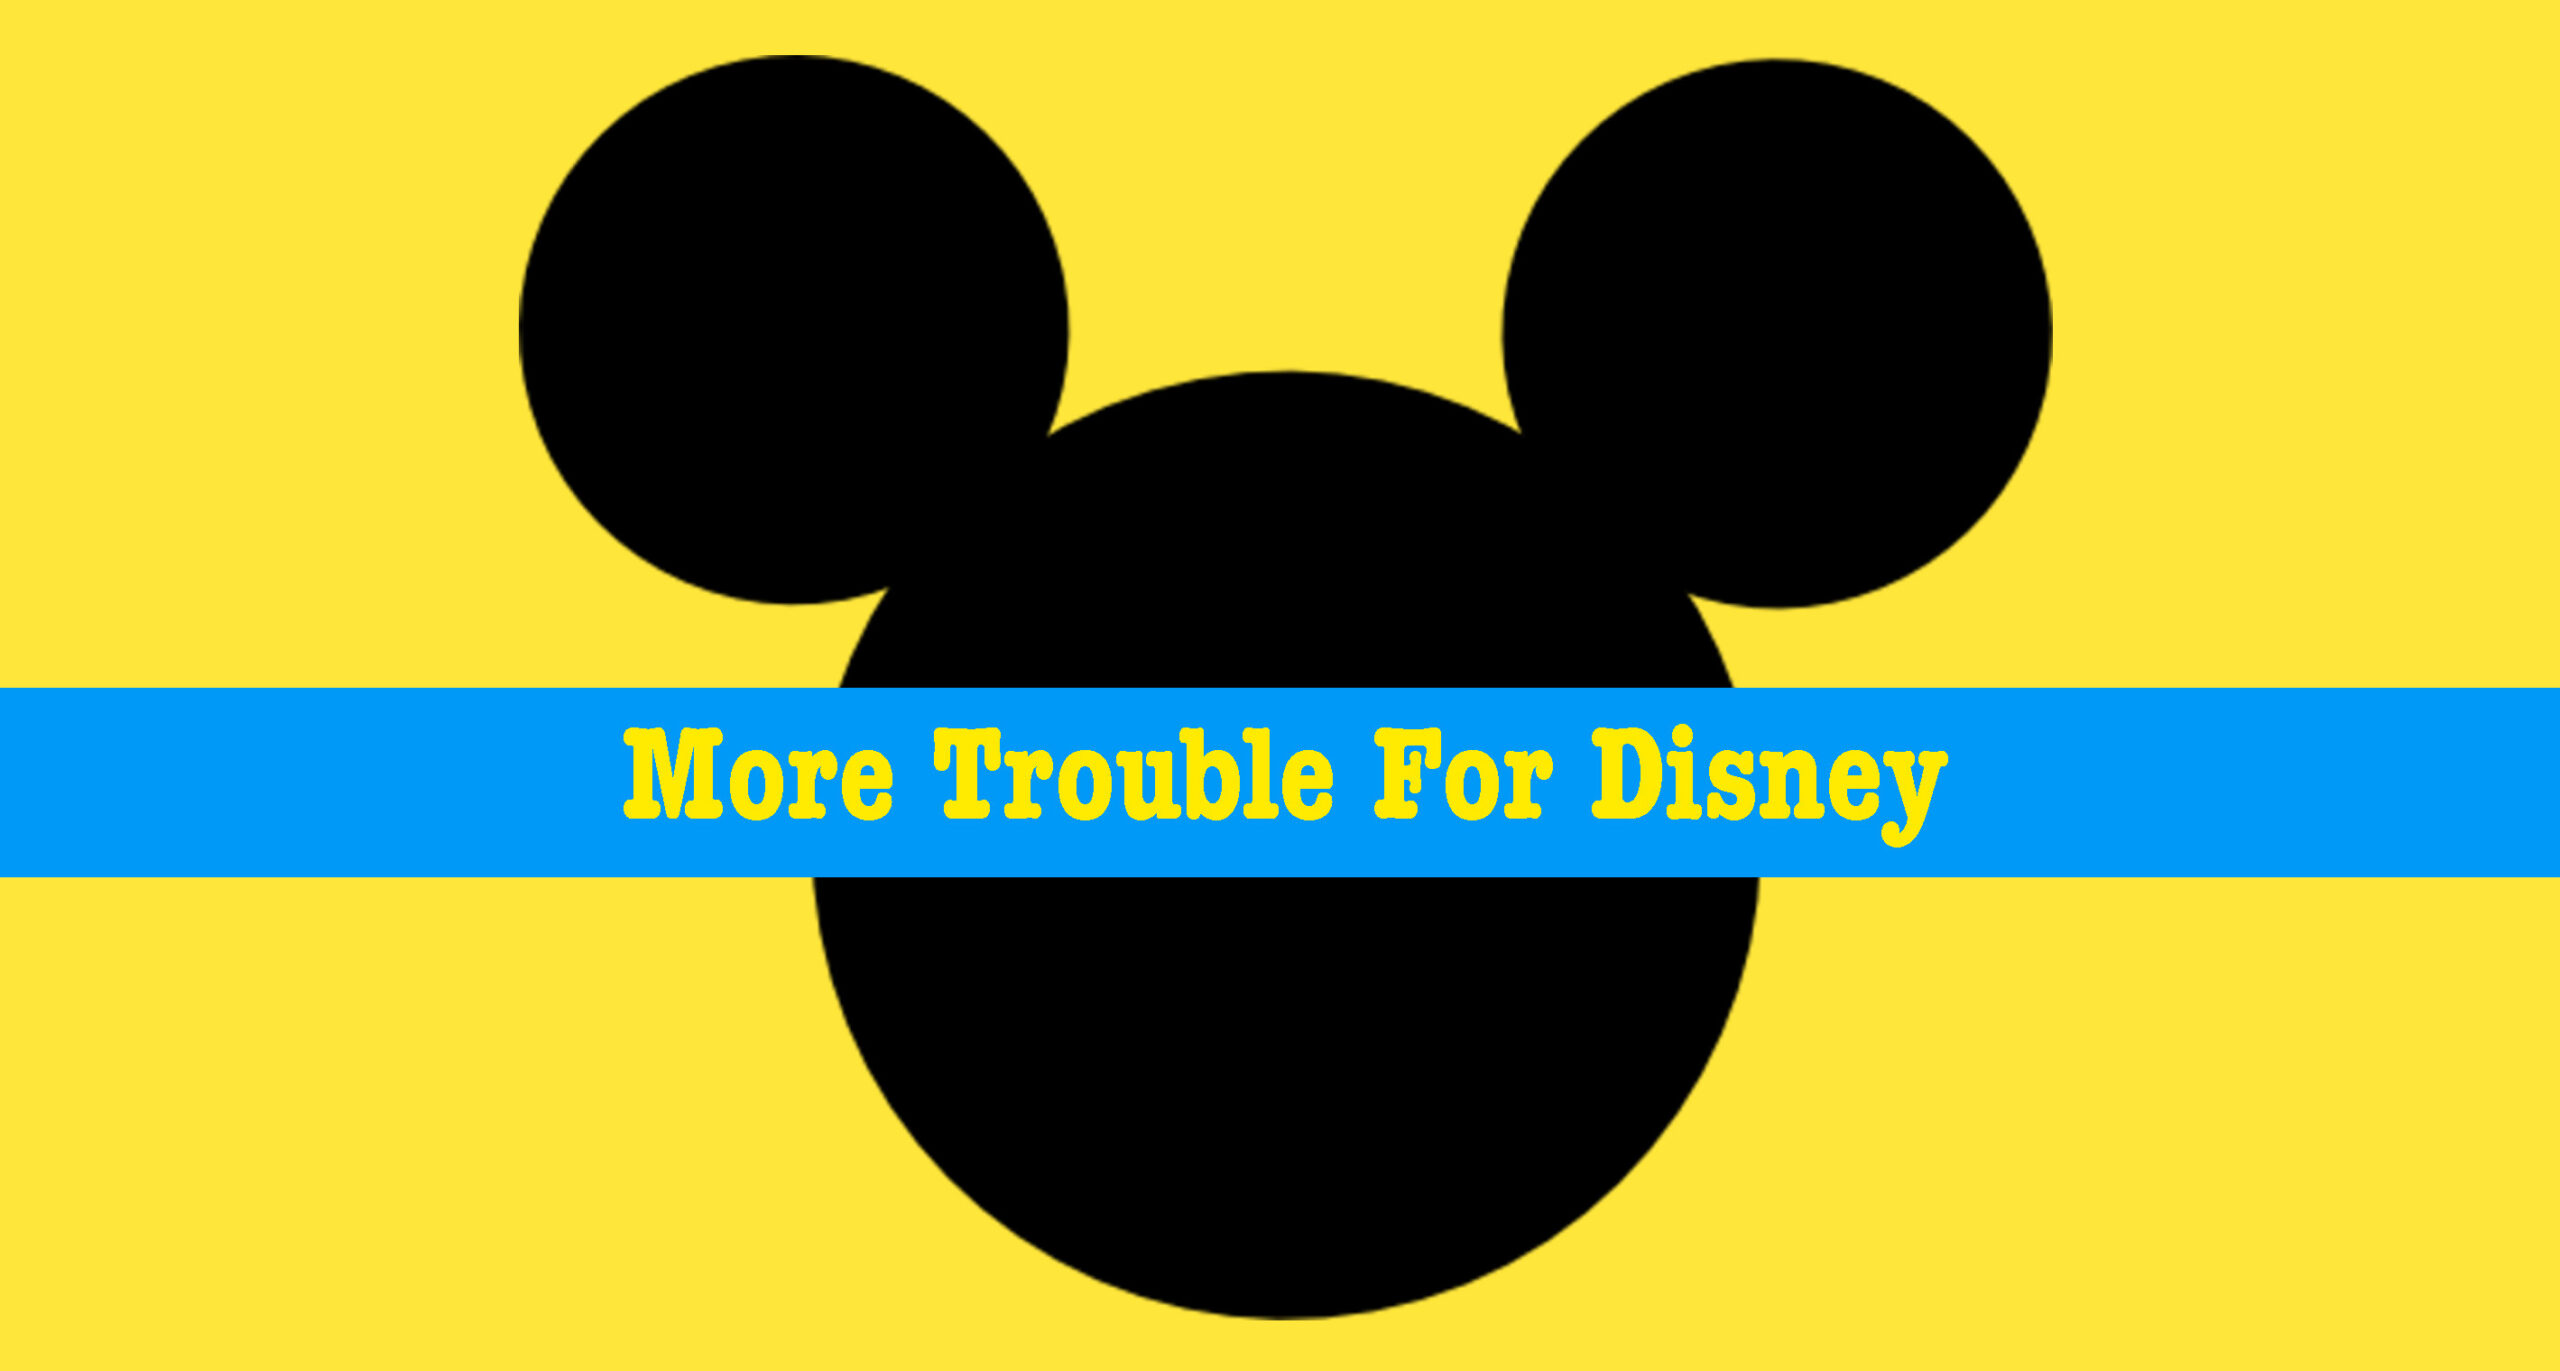 Has Disney Fallen Too Far?